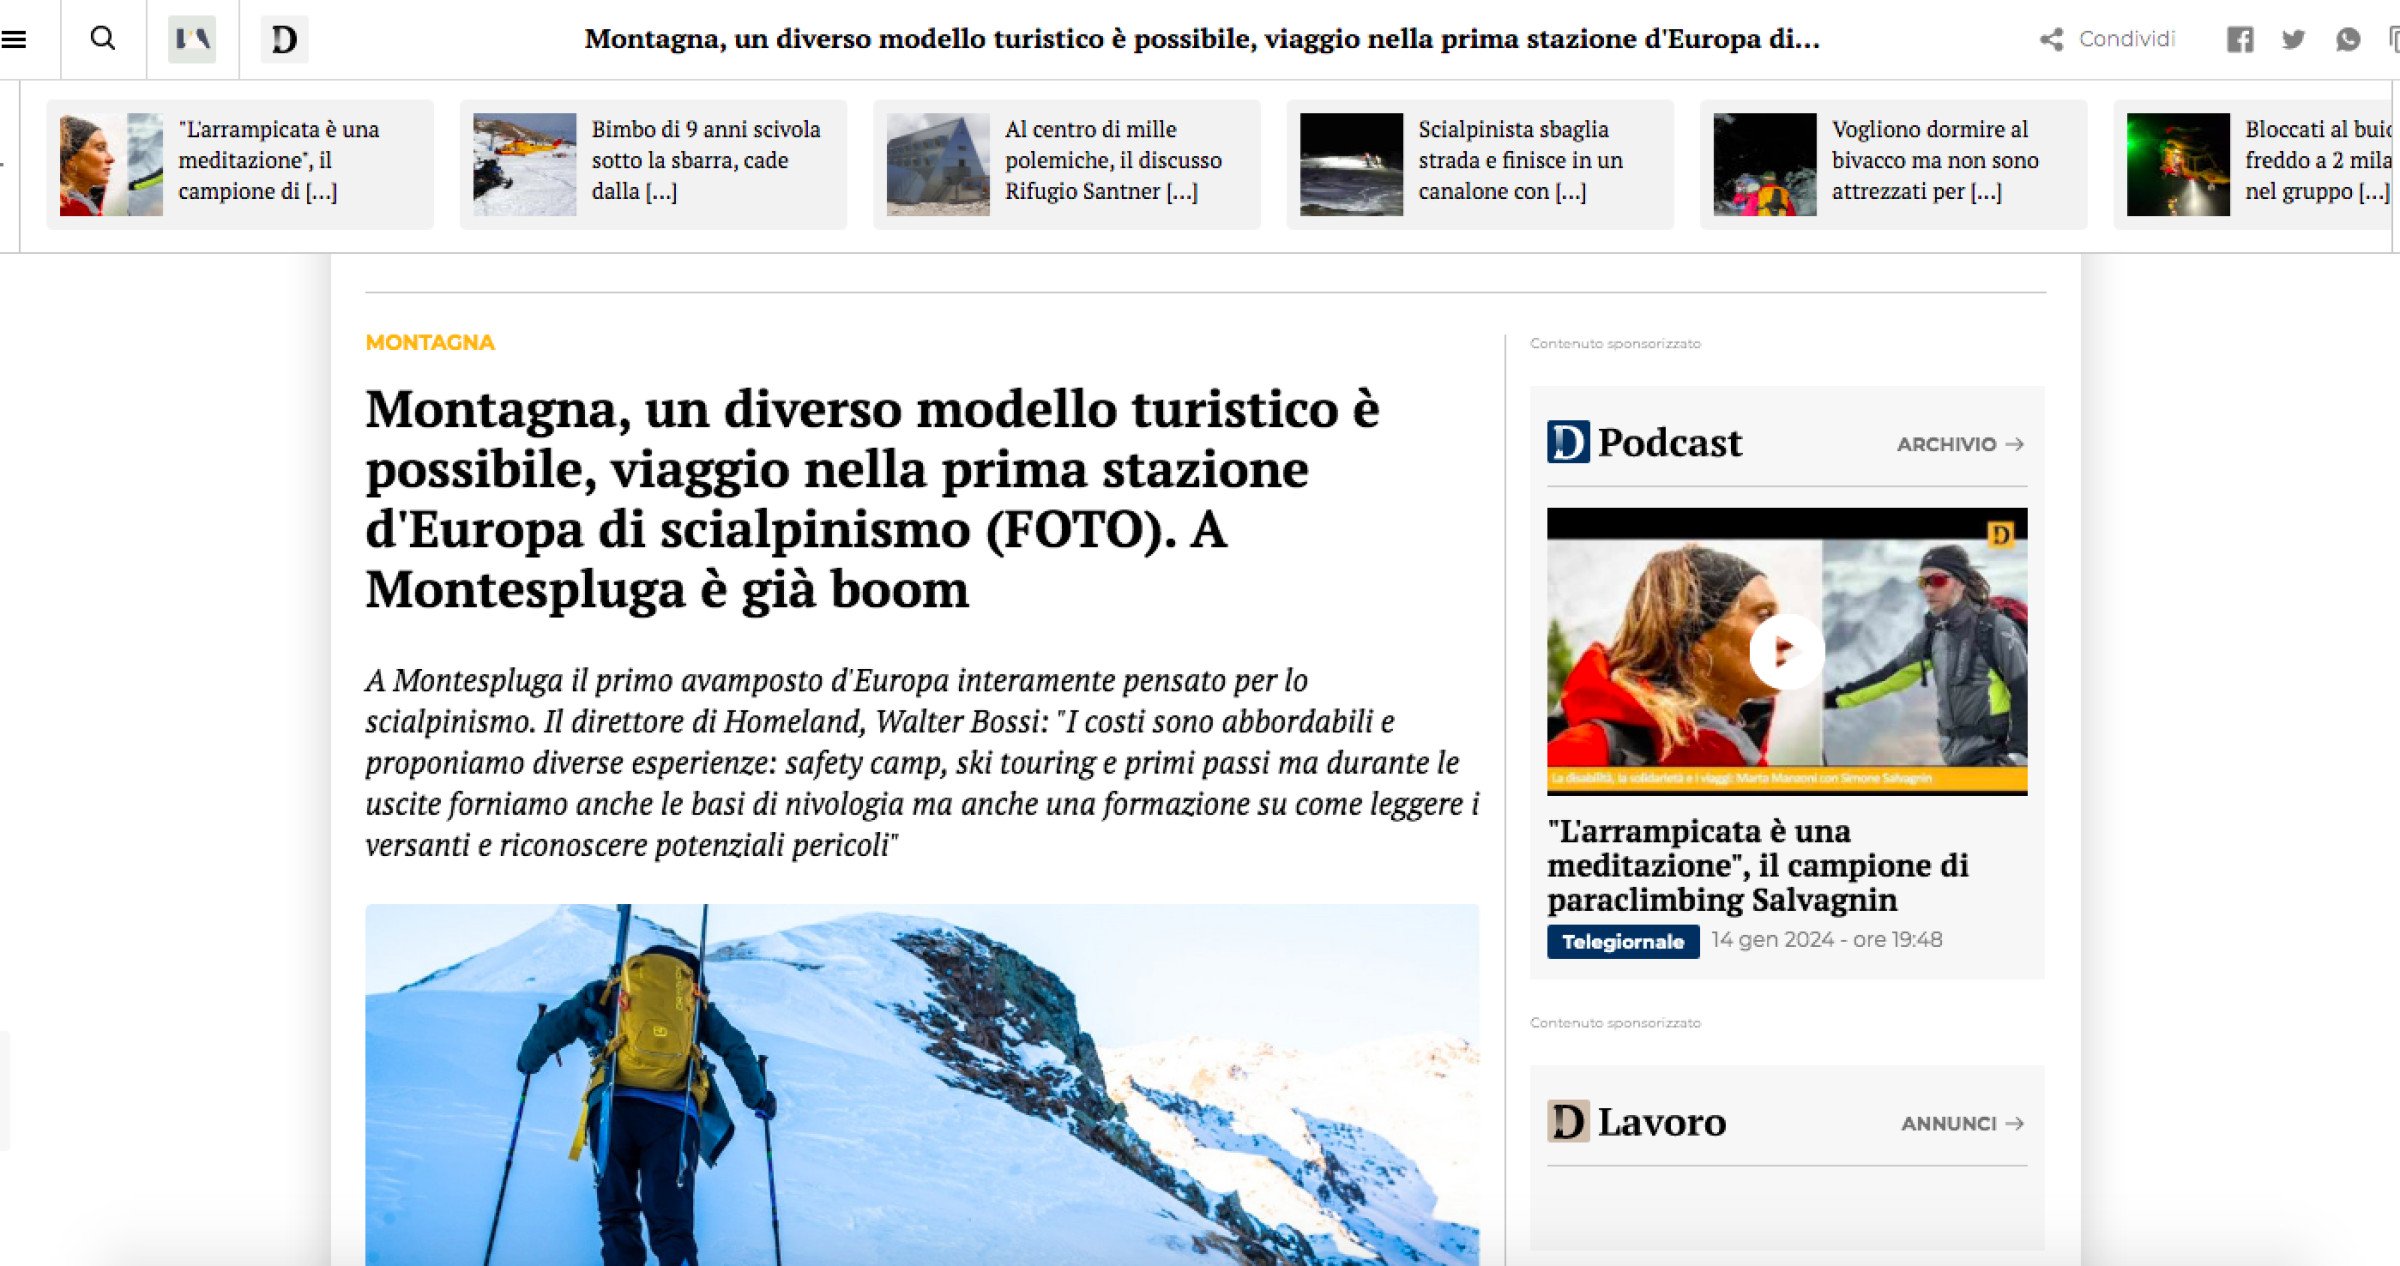 "Il Dolomiti" goes to Val Chiavenna! It's already booming in Montespluga!